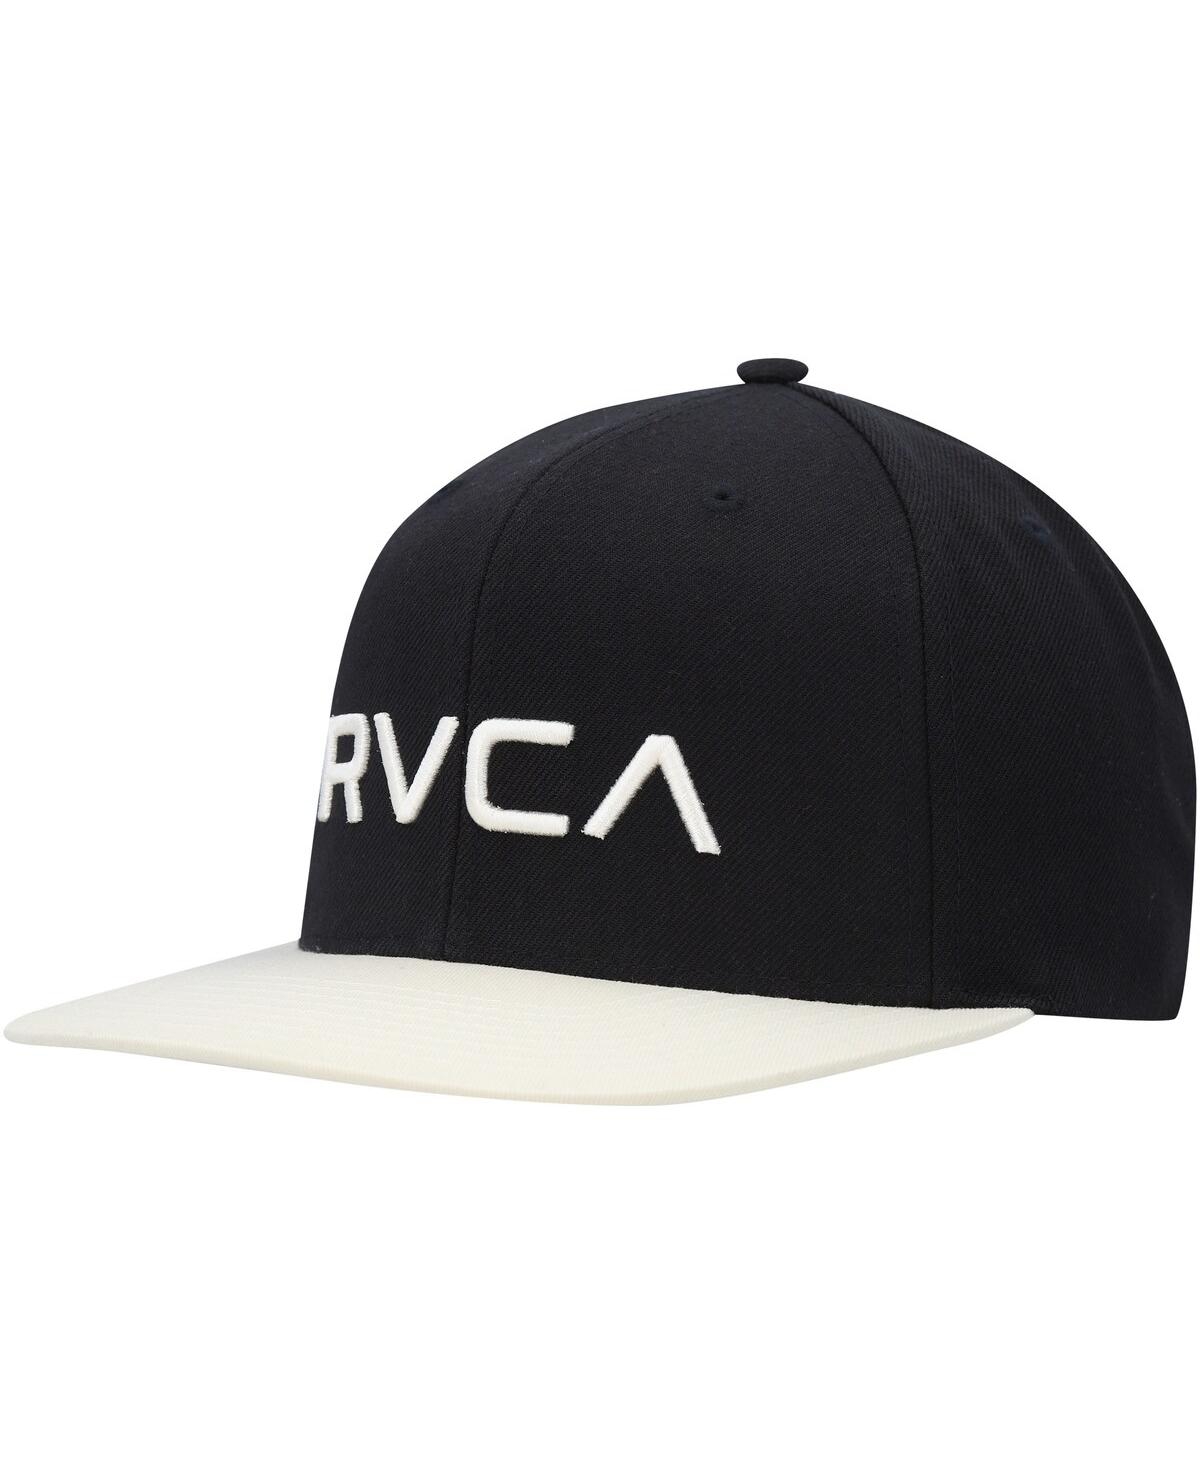 Men's Rvca Black, White Twill Ii Snapback Hat - Black, White